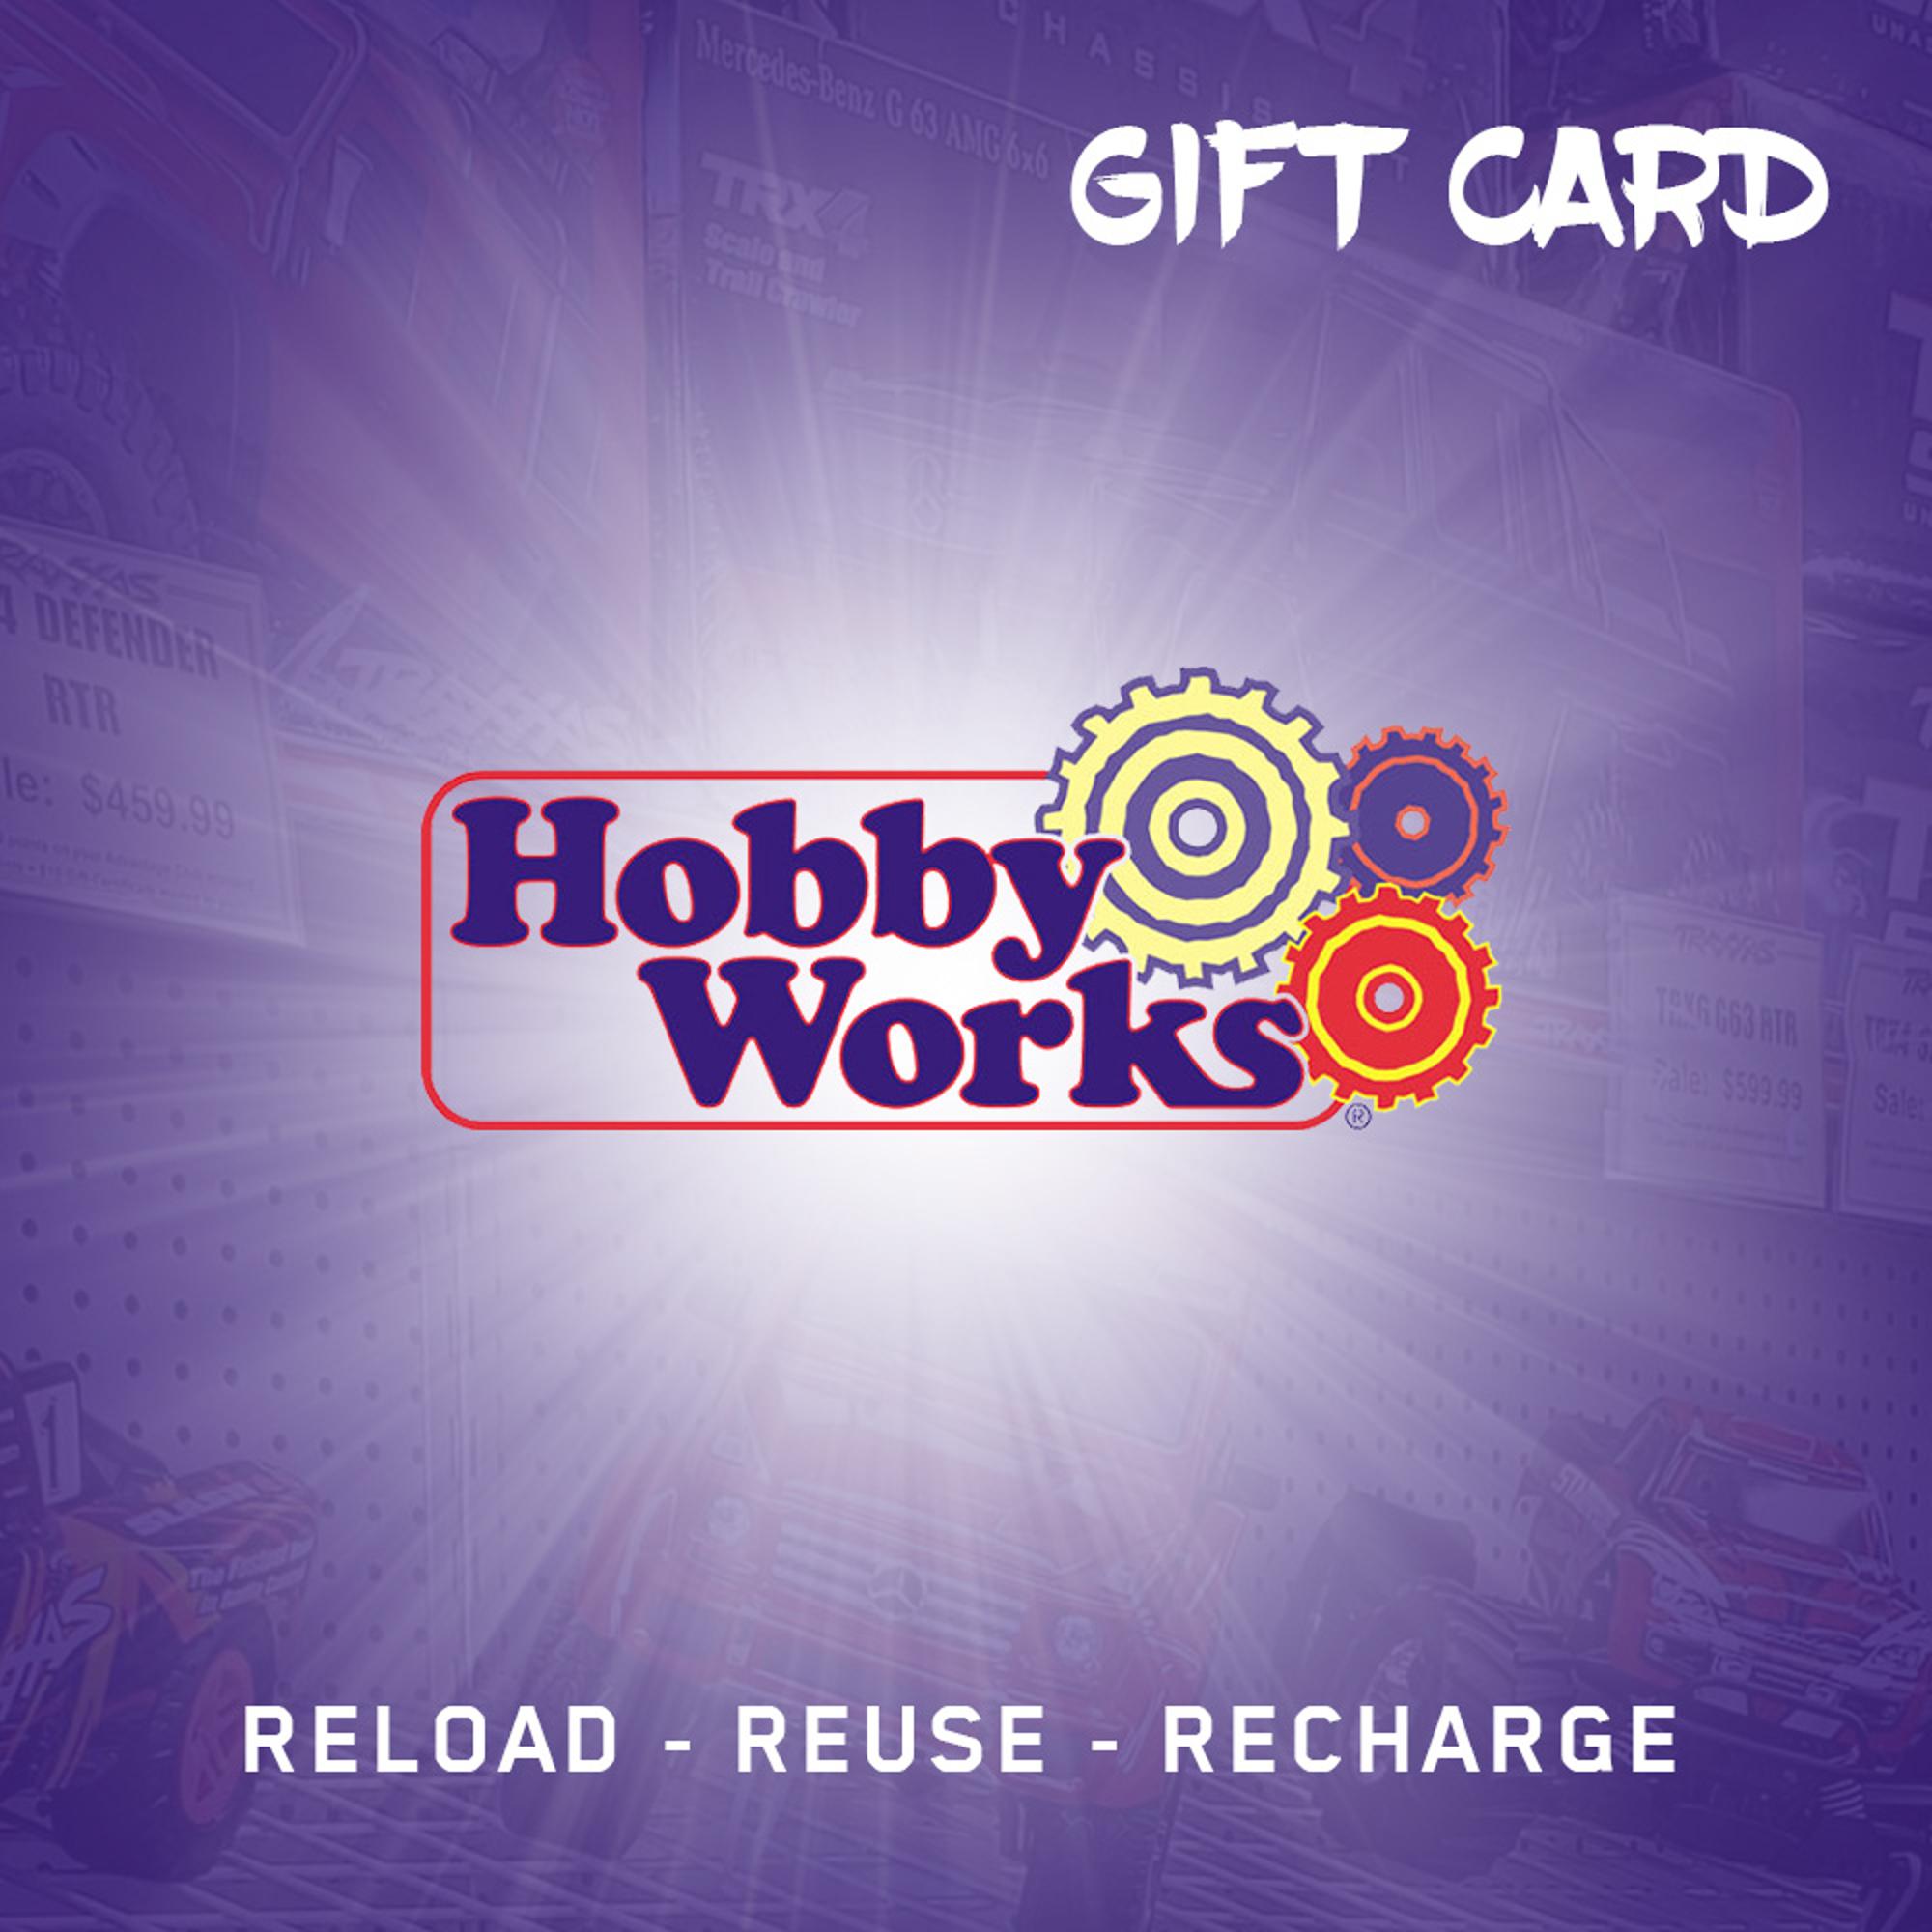 Hobby Works Gift Card: $100